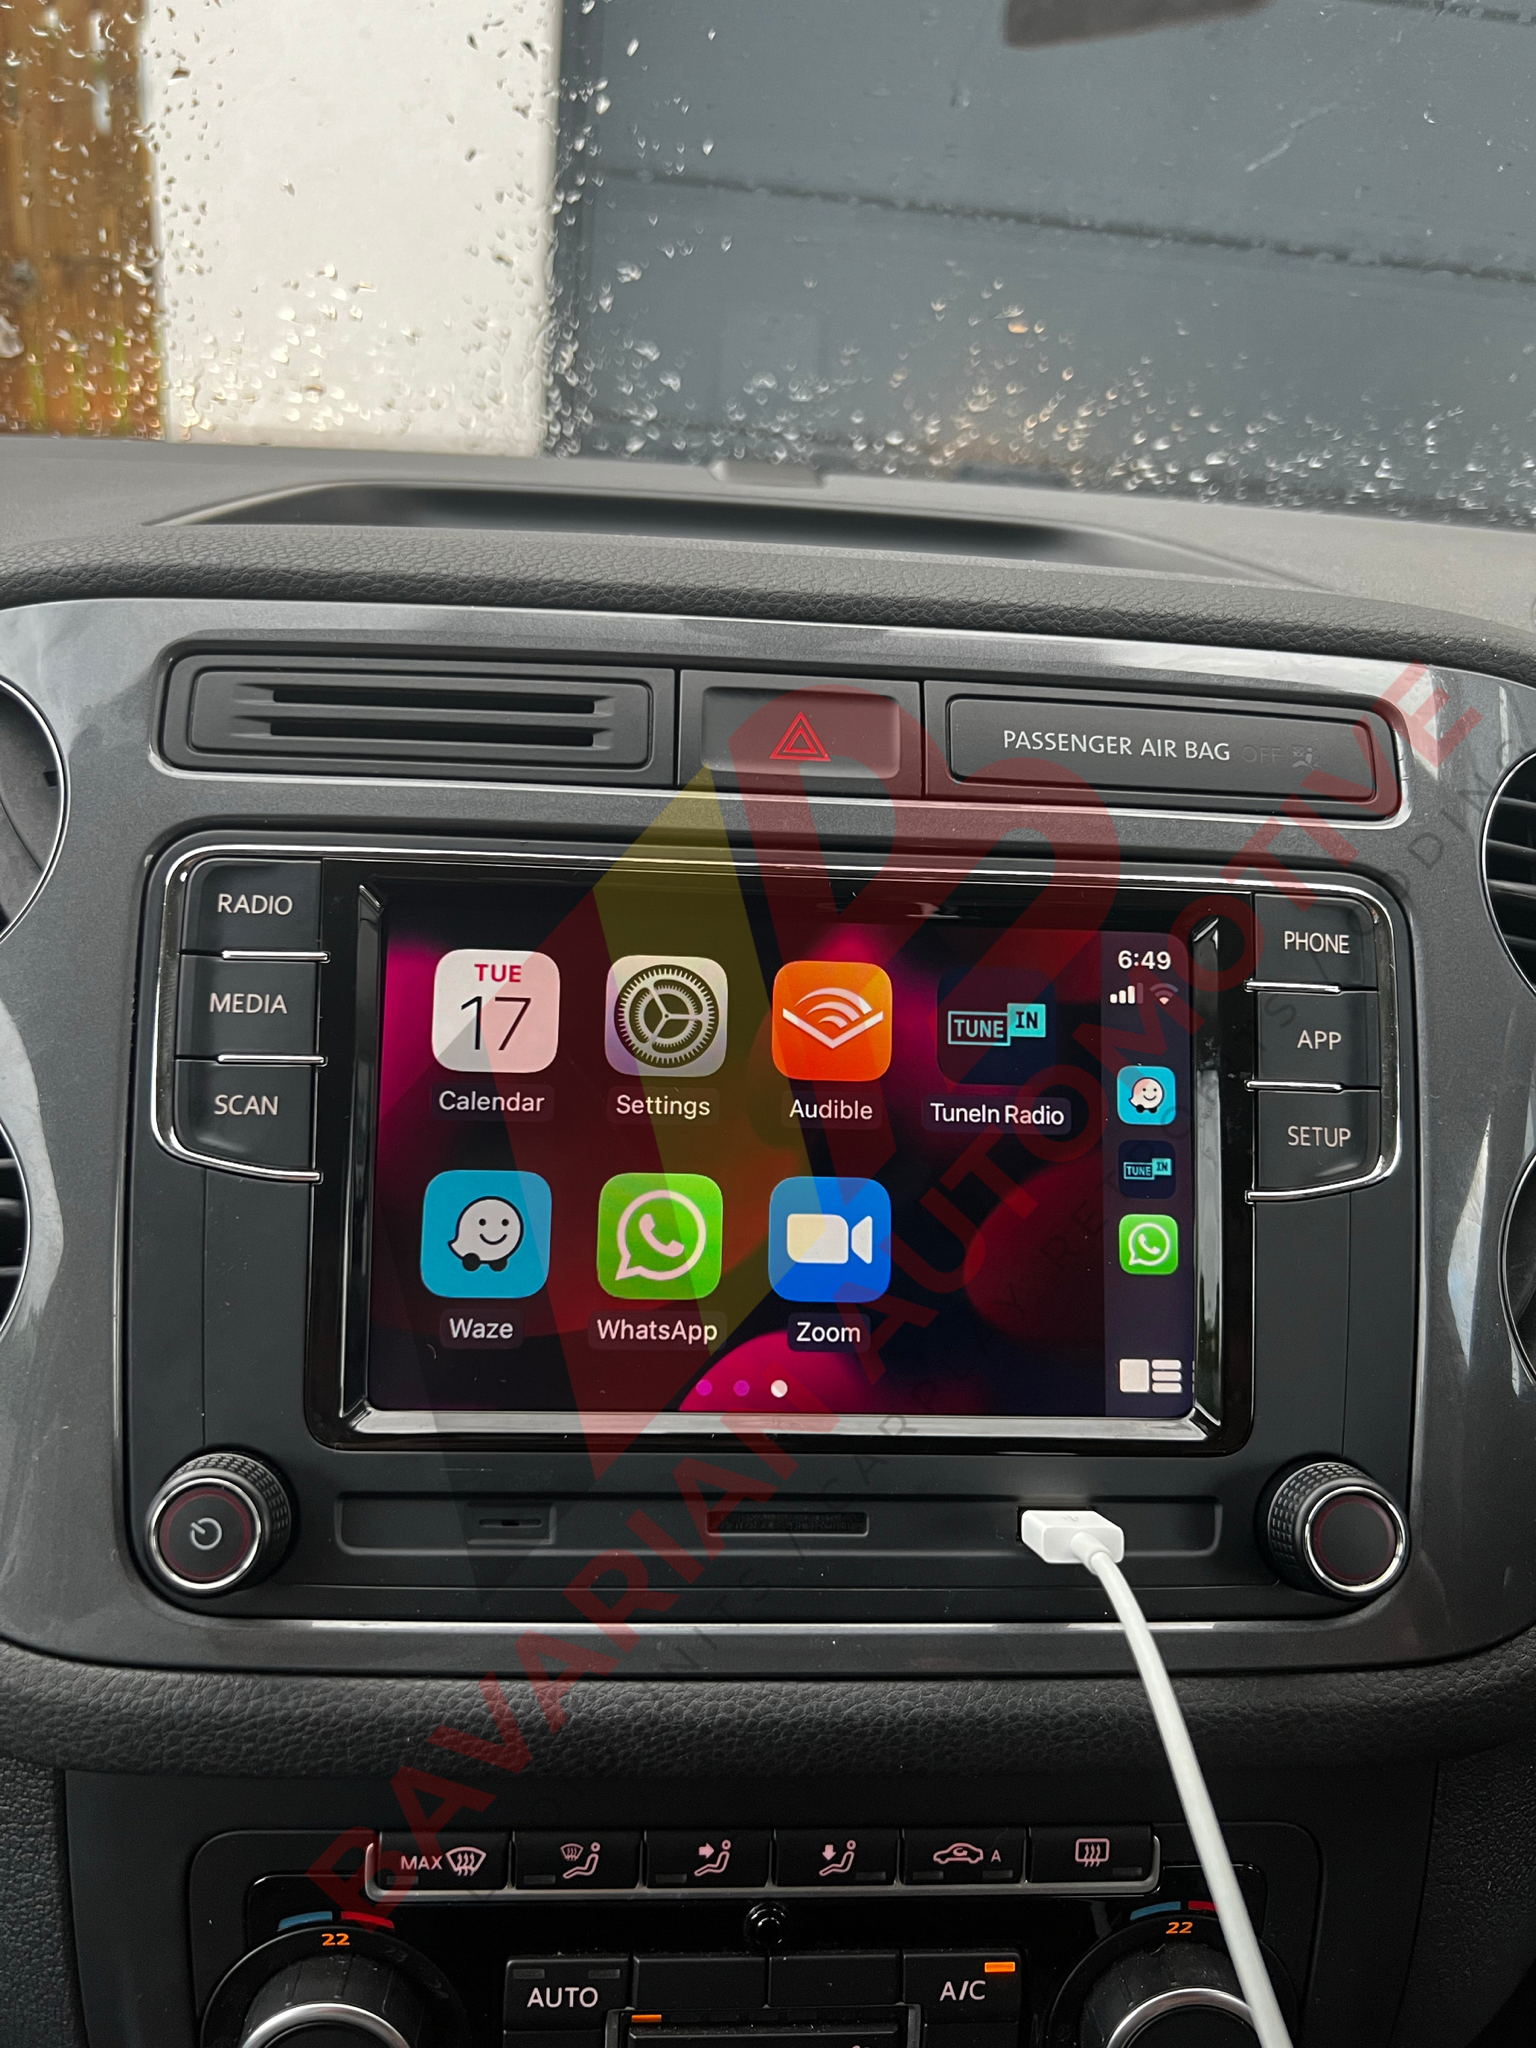 Autoradio Carplay Android Rcd360, Bluetooth, audio, Rcd330